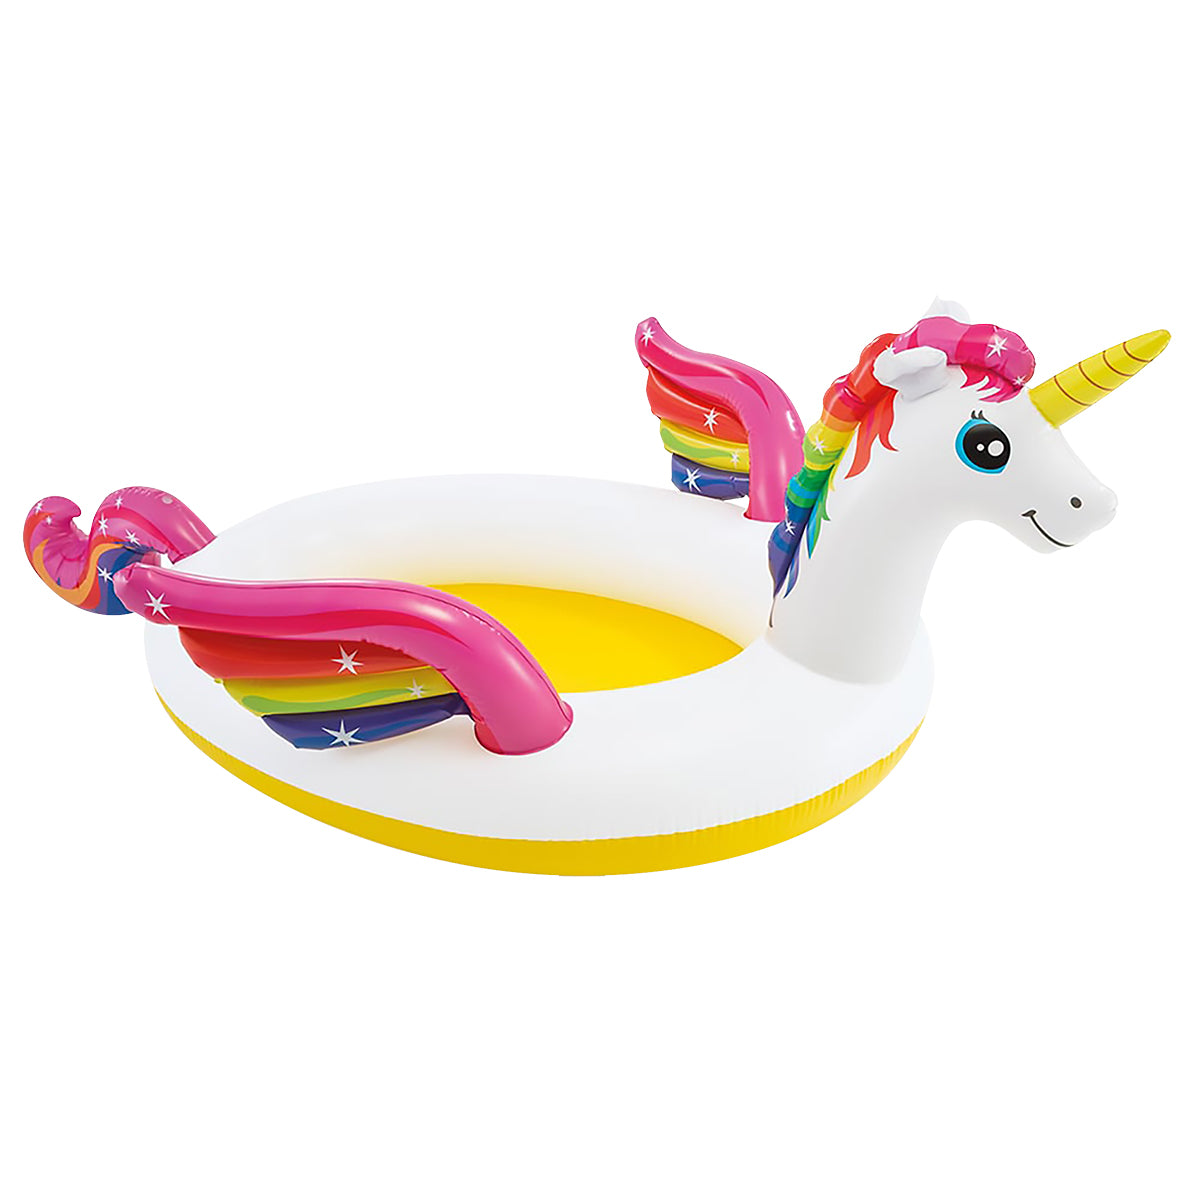 Unicorn Inflatable Kids' Pool